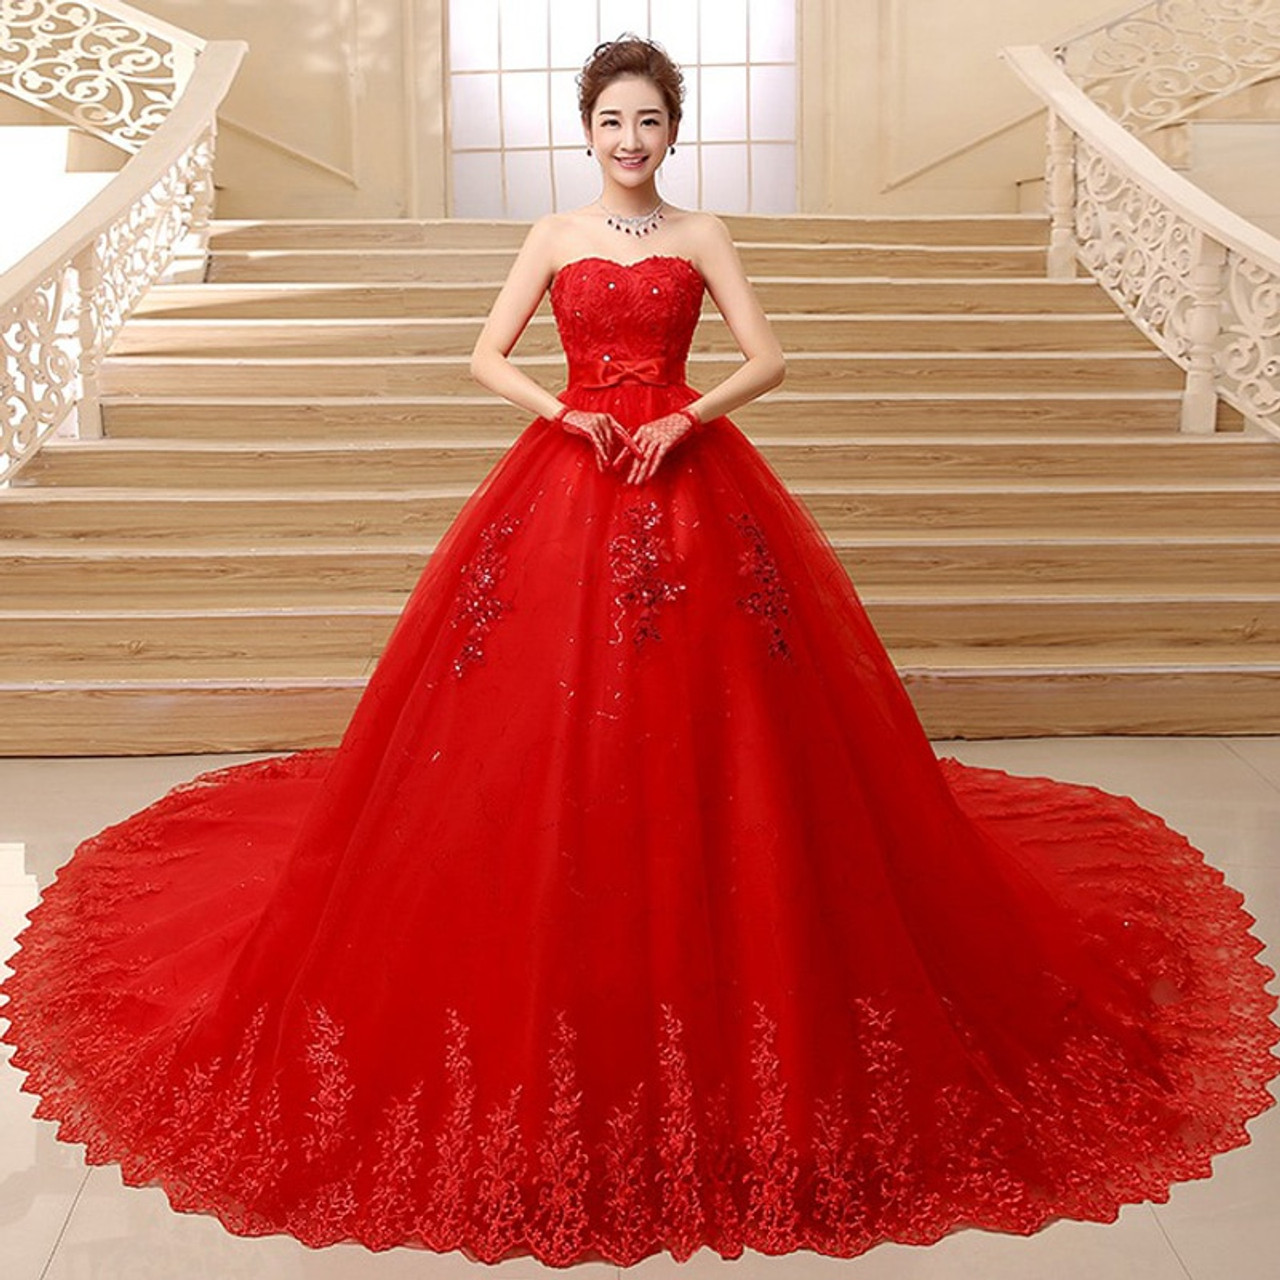 Met Gala 2018 Dresses: Red Carpet Arrivals | Glamour UK